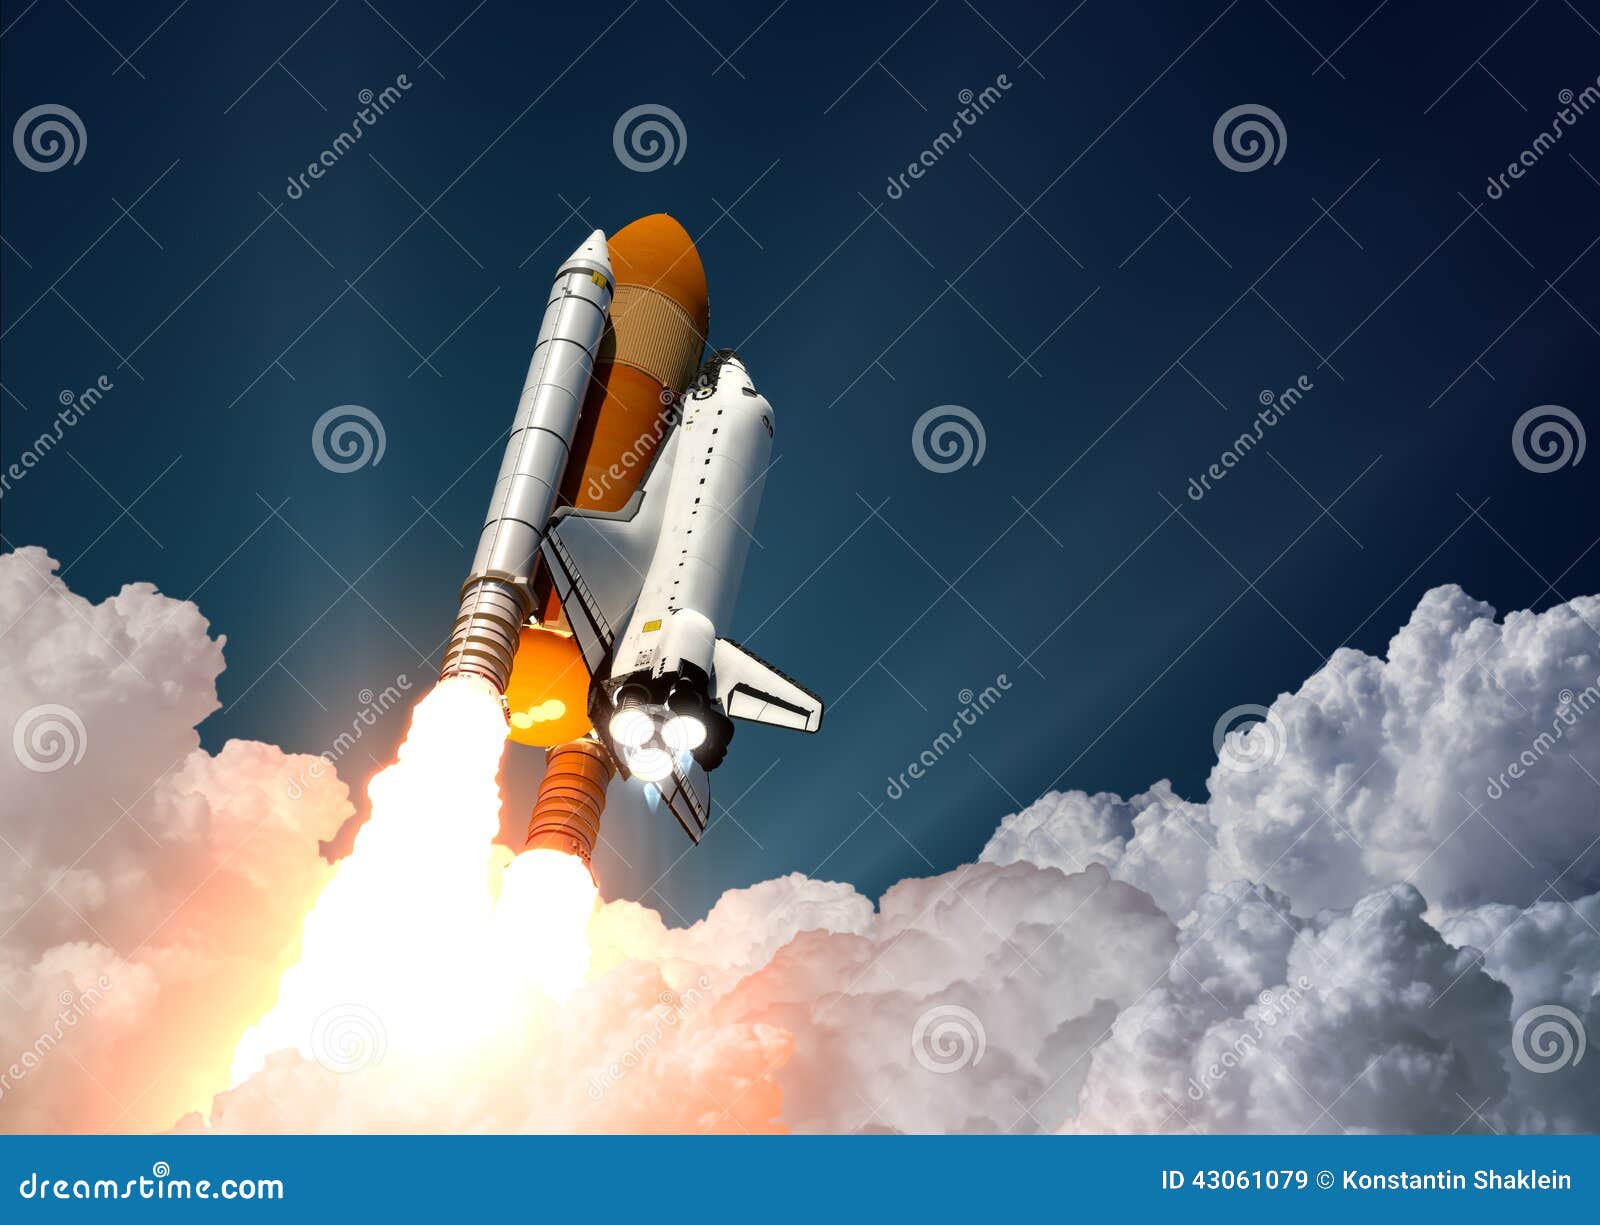 space shuttle launch.